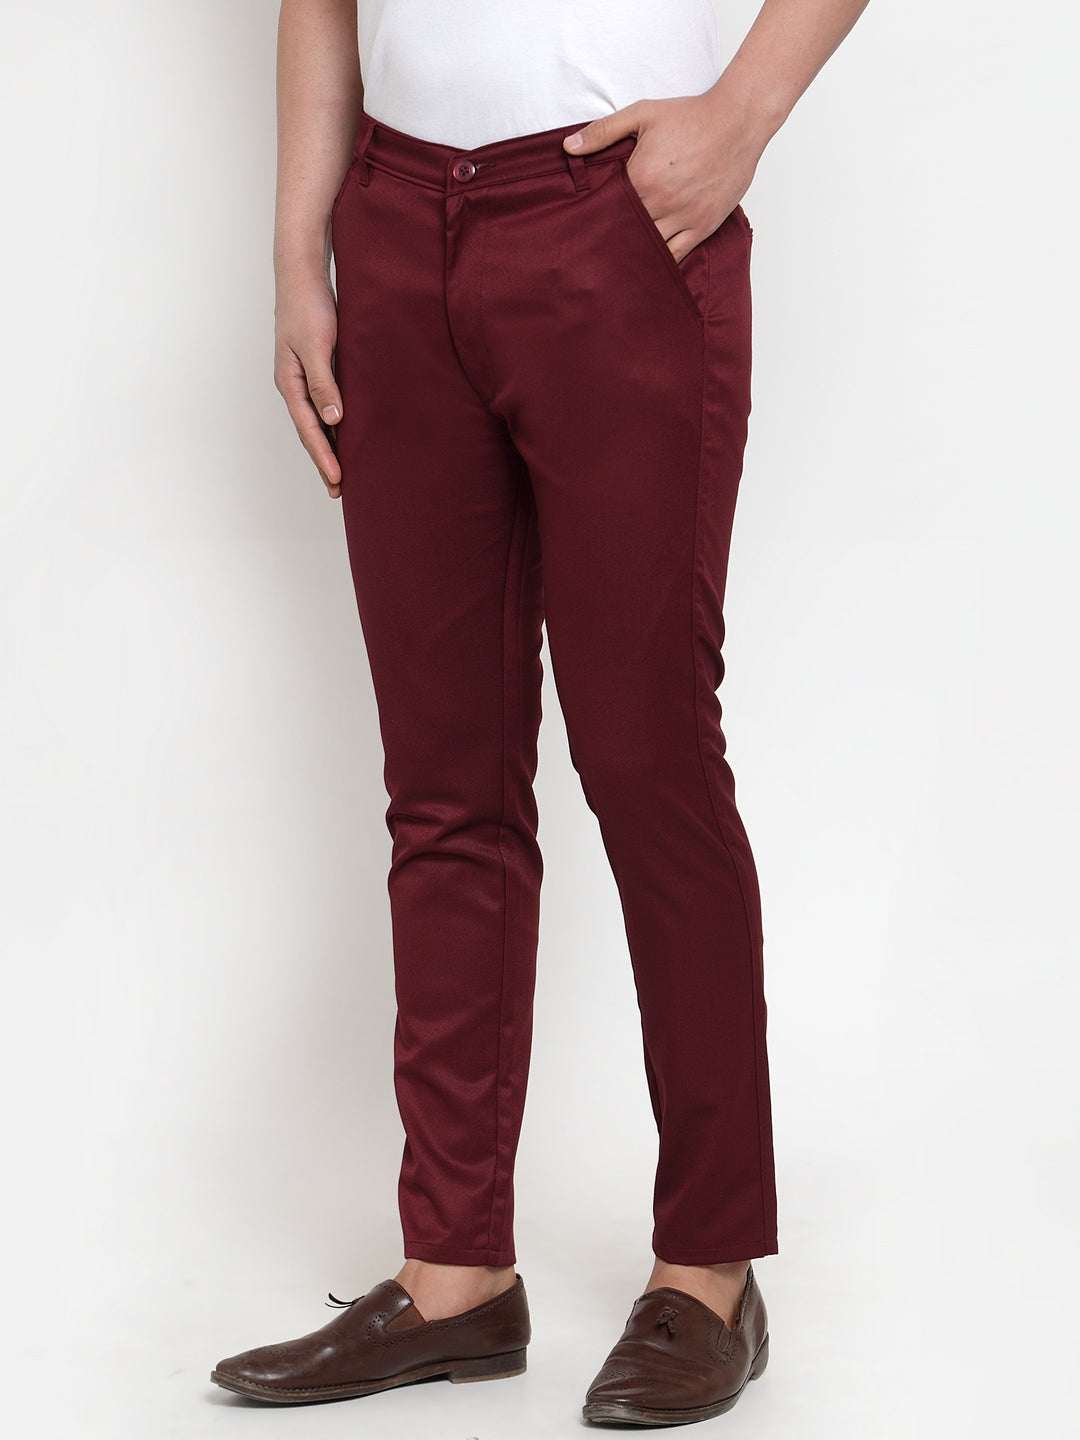 COMBRAIDED Slim Fit Men Maroon Trousers  Buy COMBRAIDED Slim Fit Men Maroon  Trousers Online at Best Prices in India  Flipkartcom